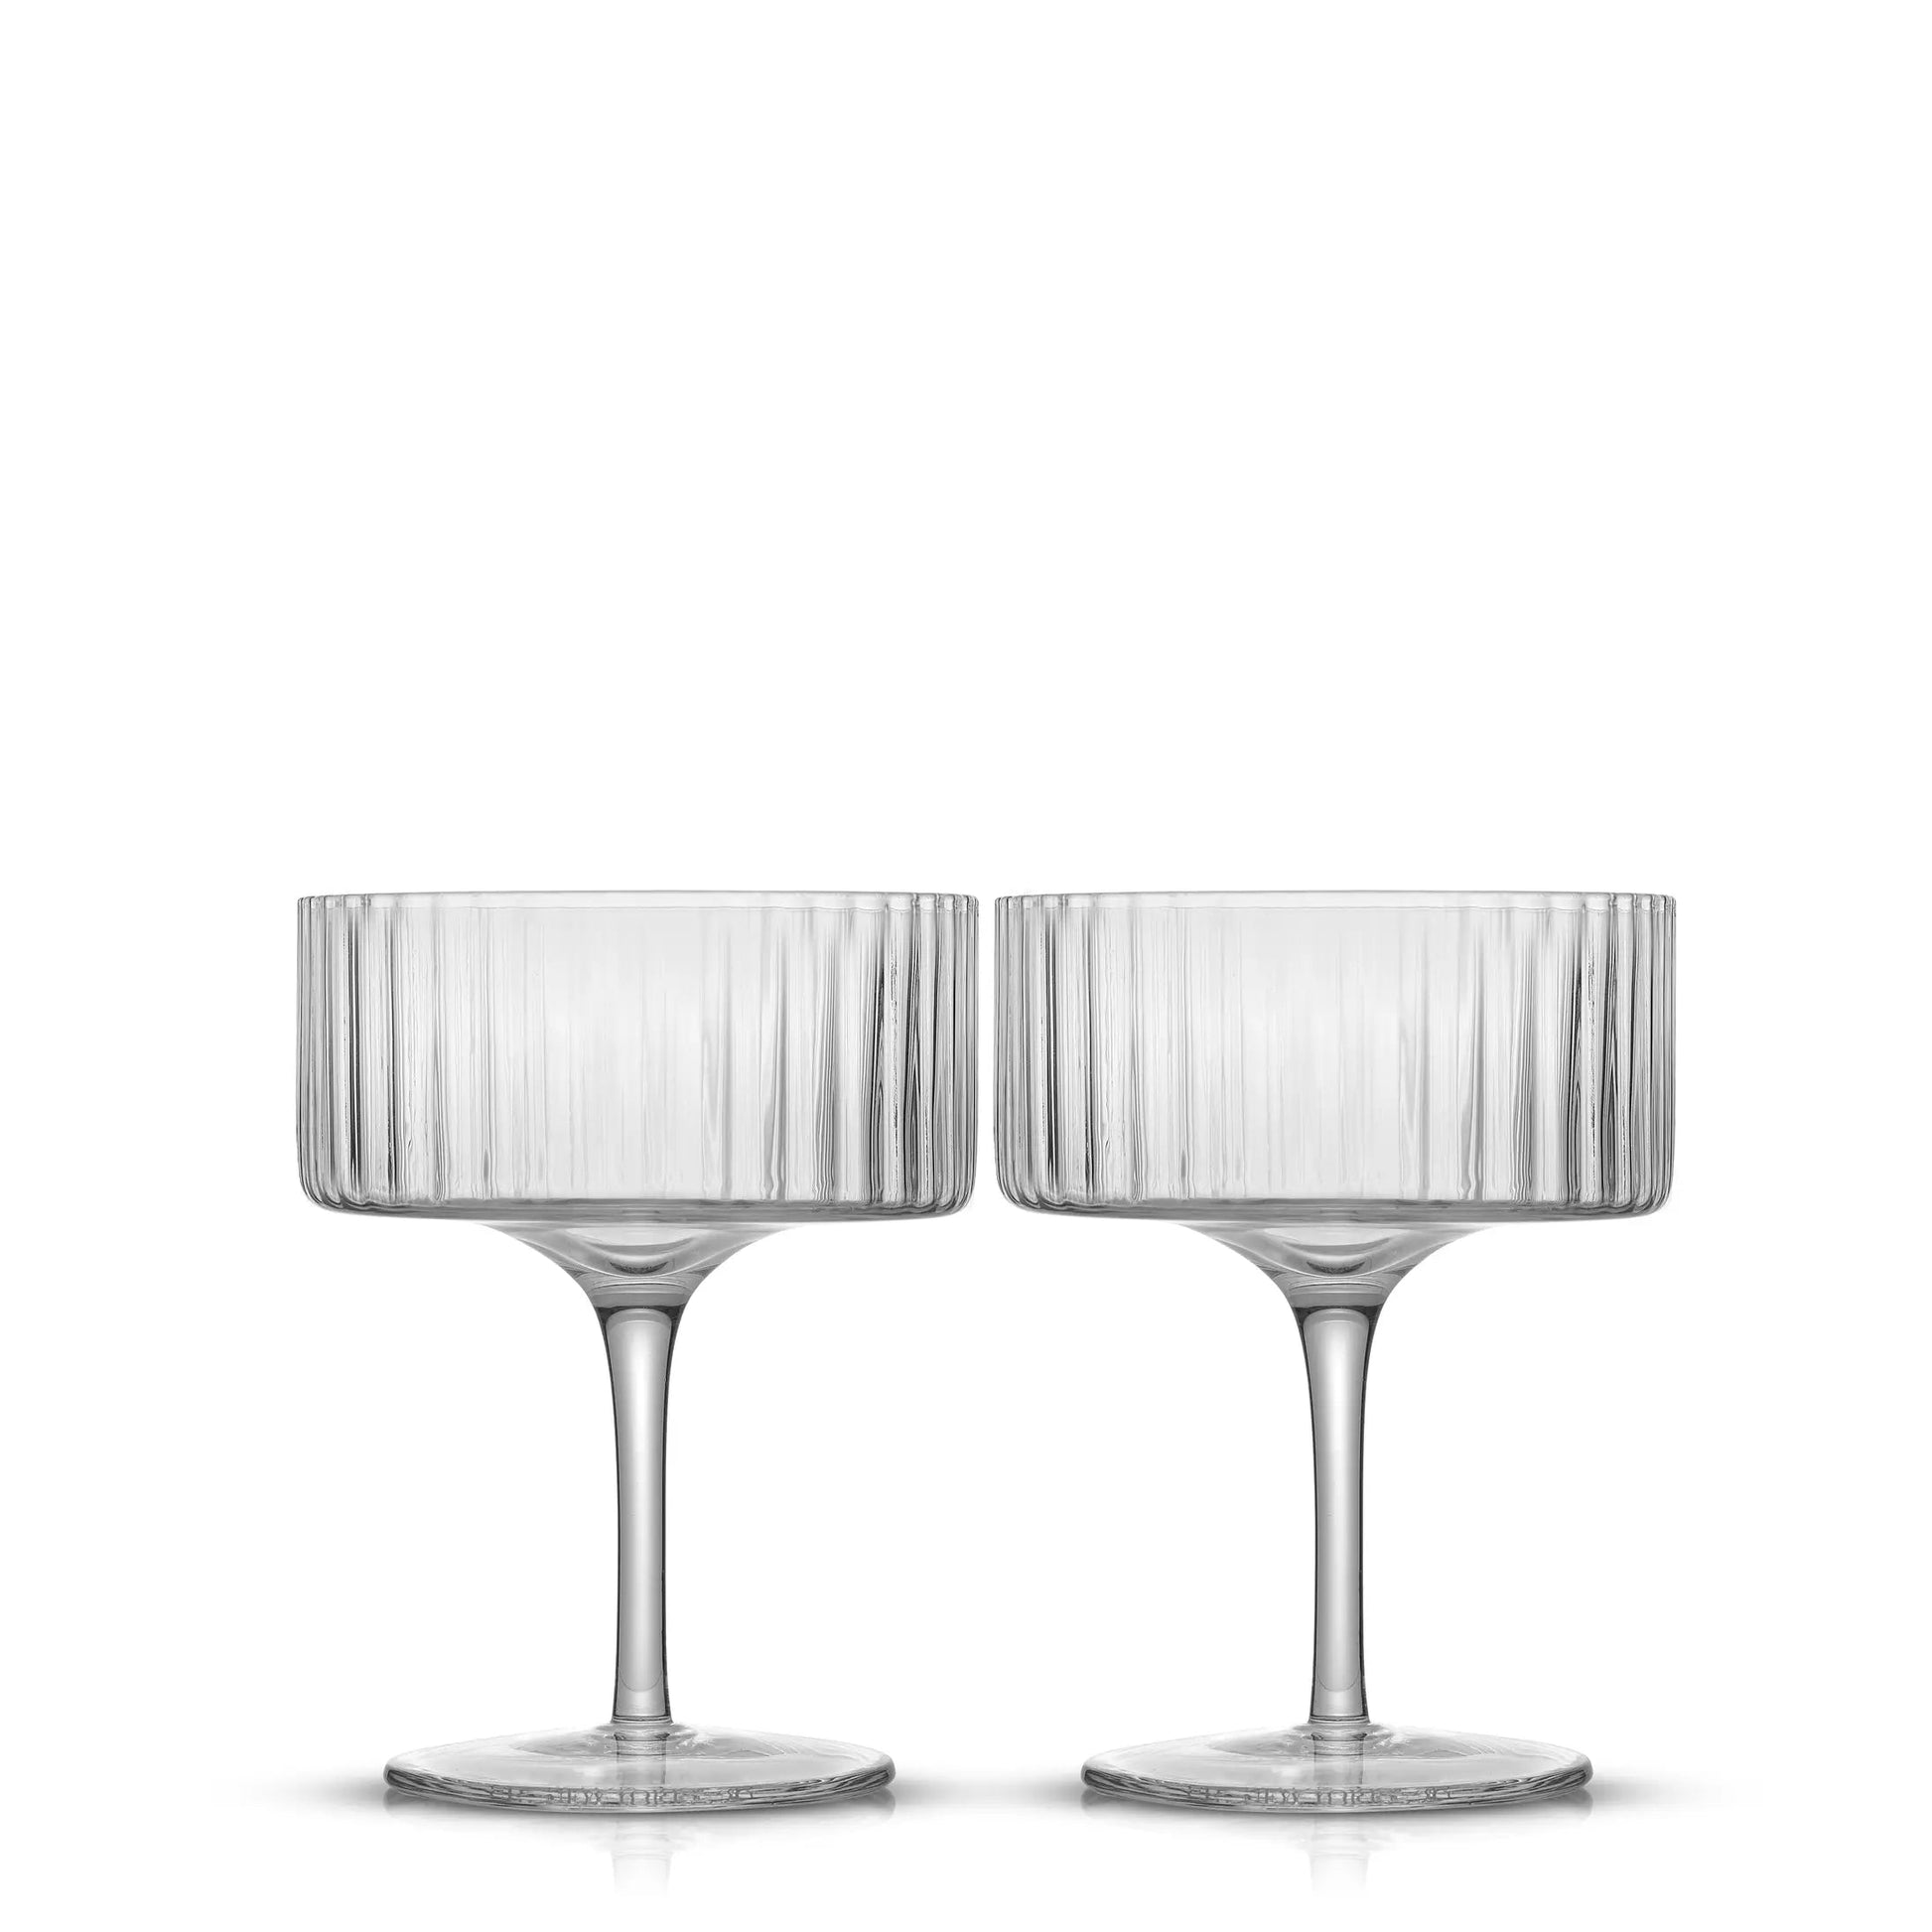 JoyJolt Elle Fluted Cylinder Martini Coupe Glass - Set of 2